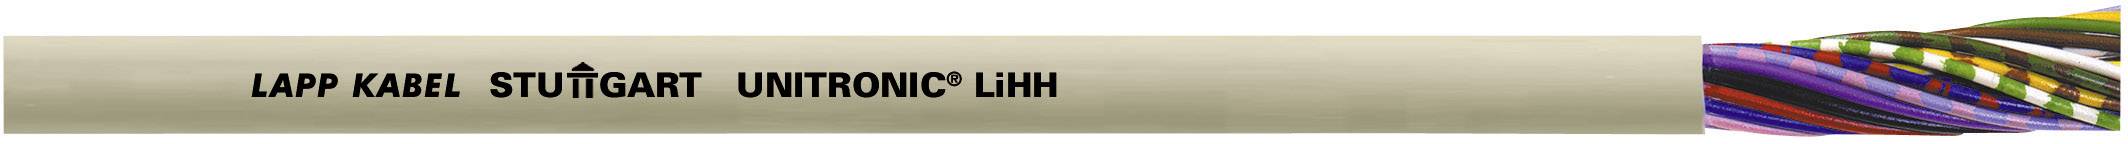 LAPP 37160-100 Datenleitung UNITRONIC LiHH 2 x 0.75 mm² Kieselgrau (RAL 7032) 100 m